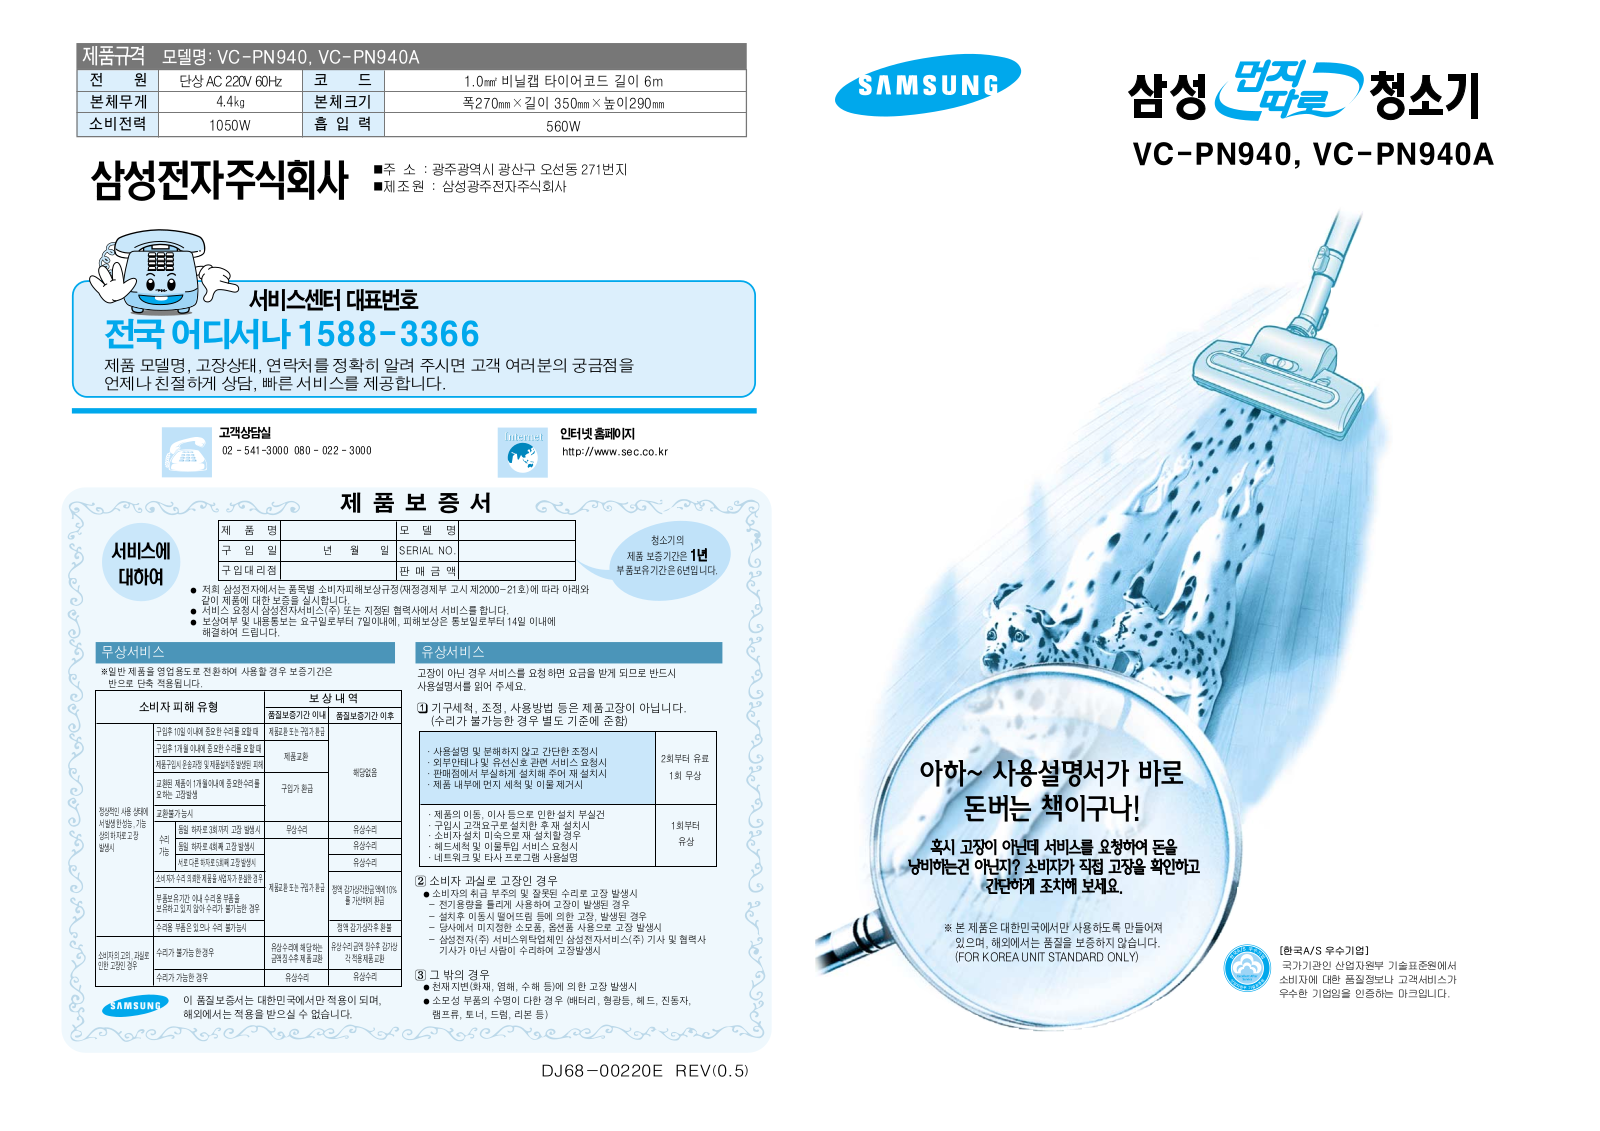 Samsung VC-PN940A, VC-PN940 User Manual